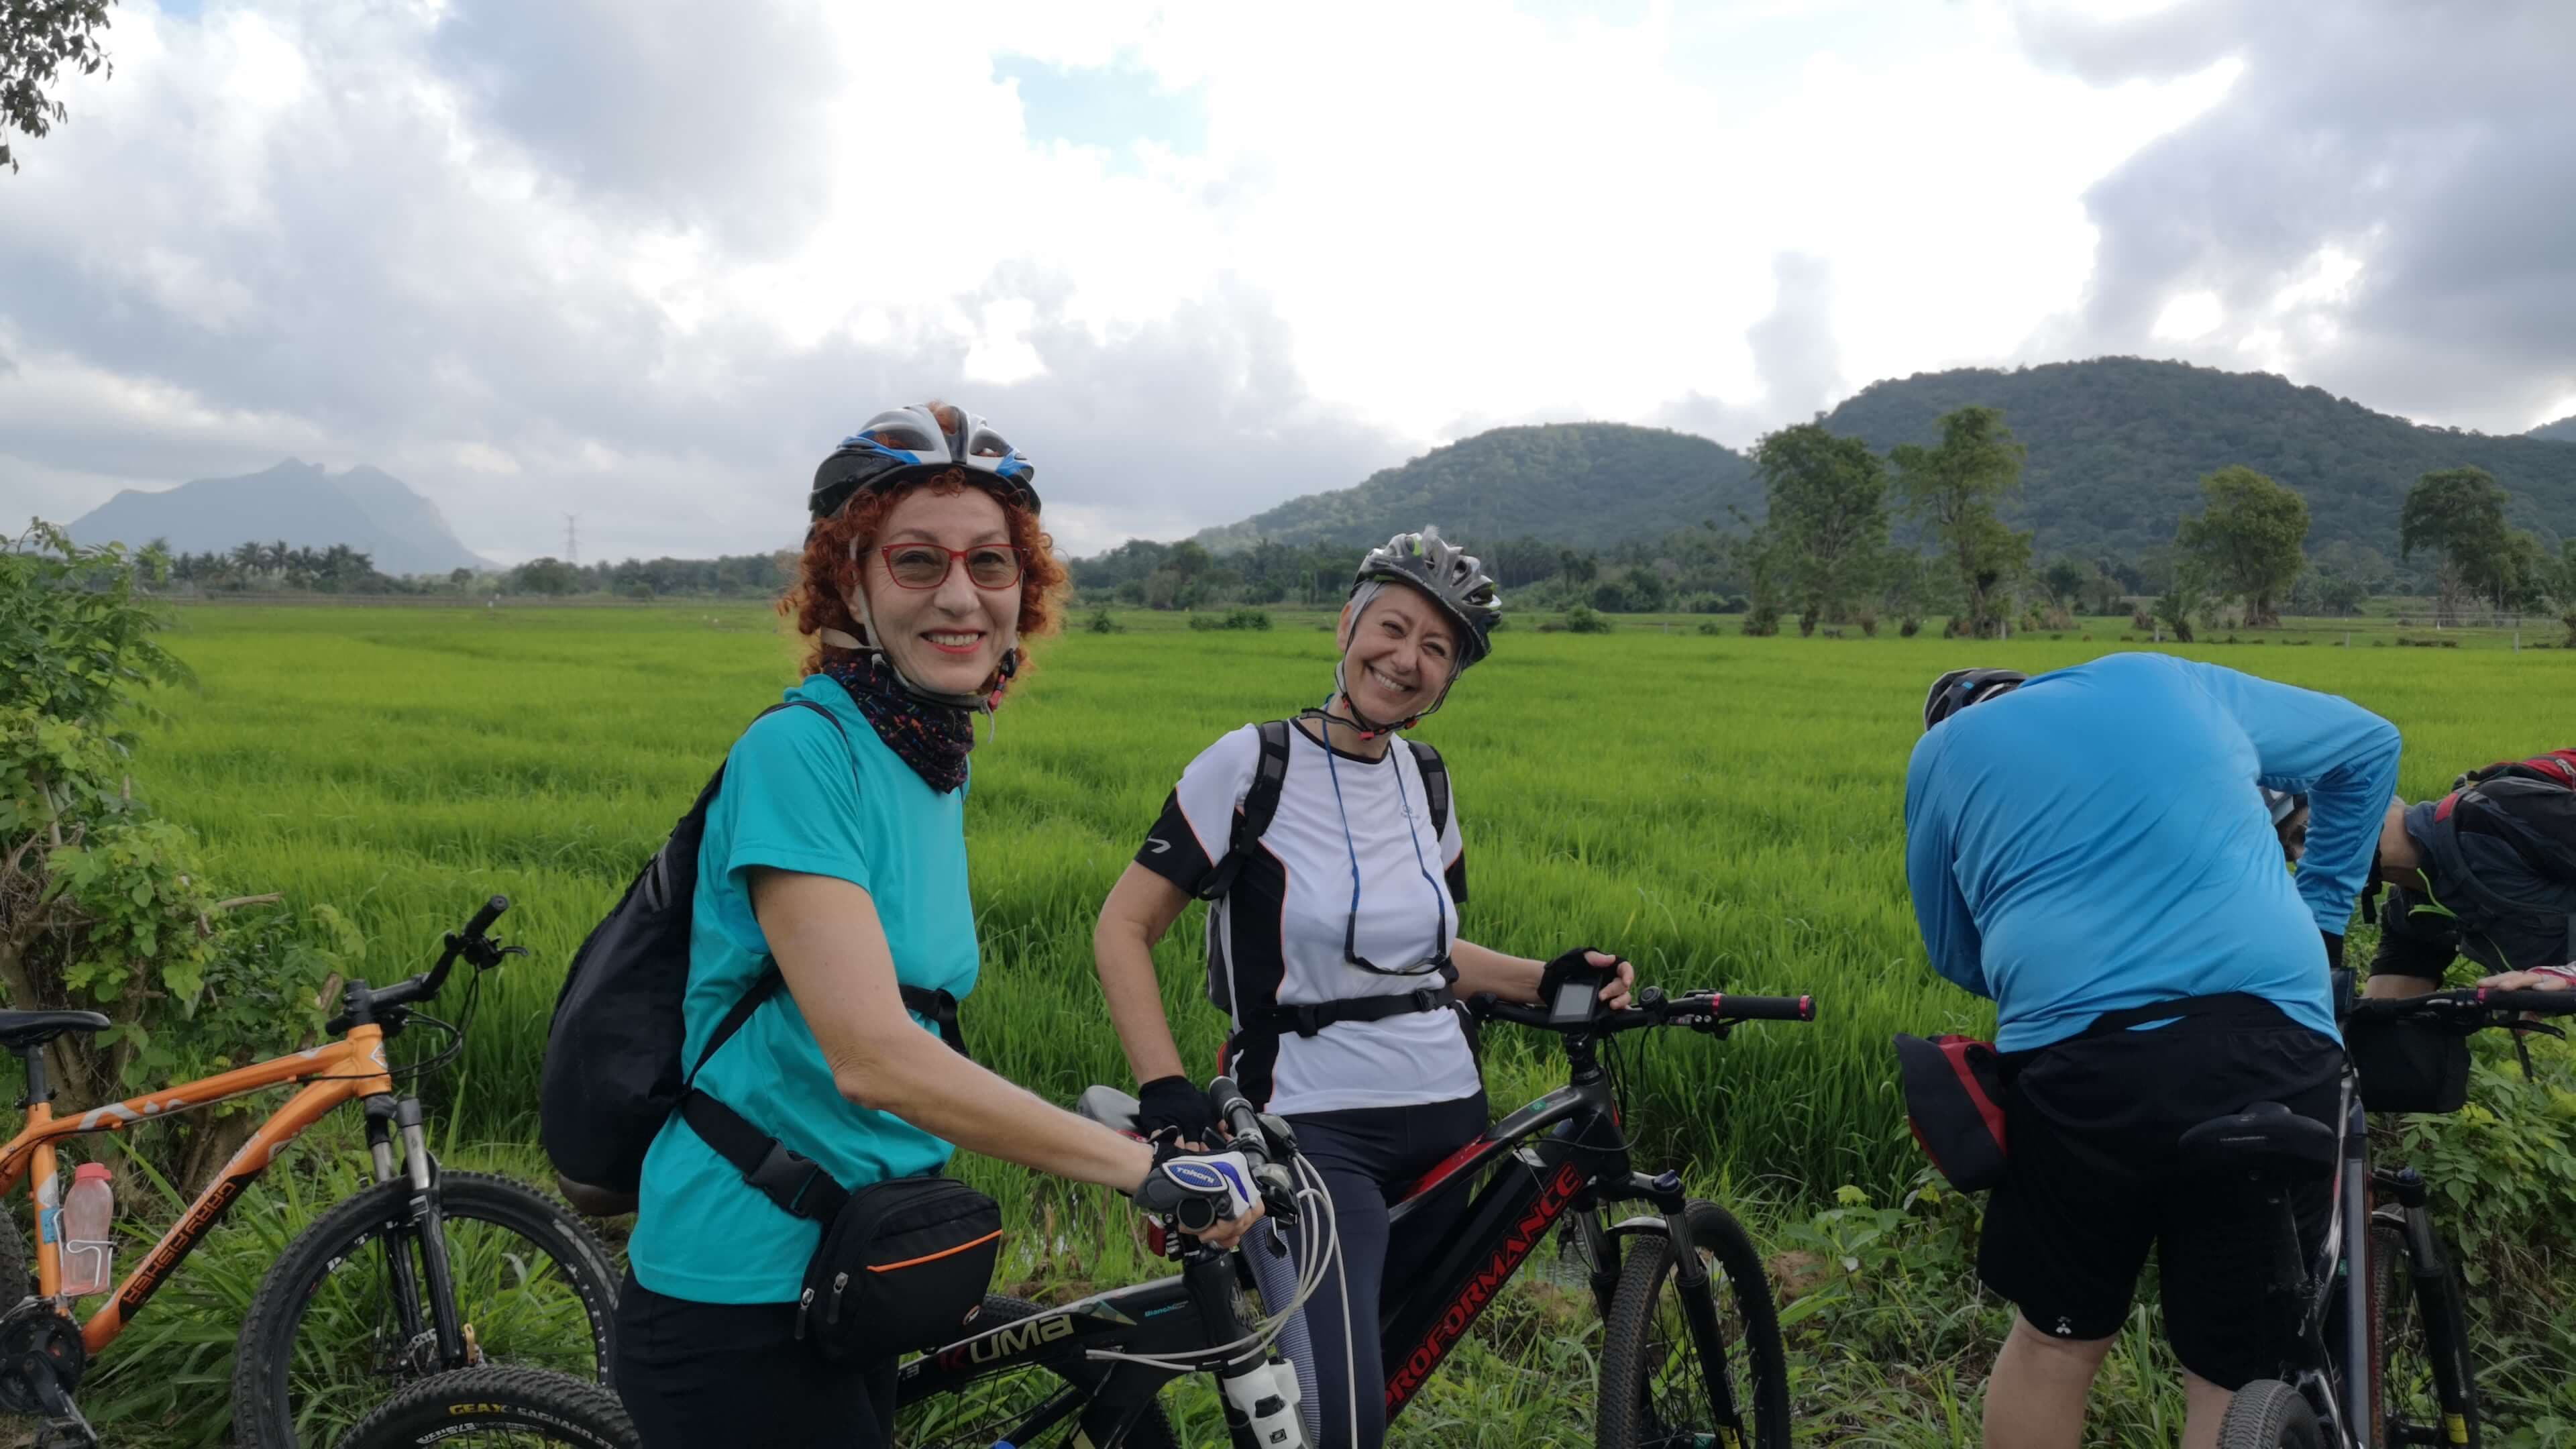 The tourists cycling near a beautiful paddy field in Polonnaruwa Sri Lanka